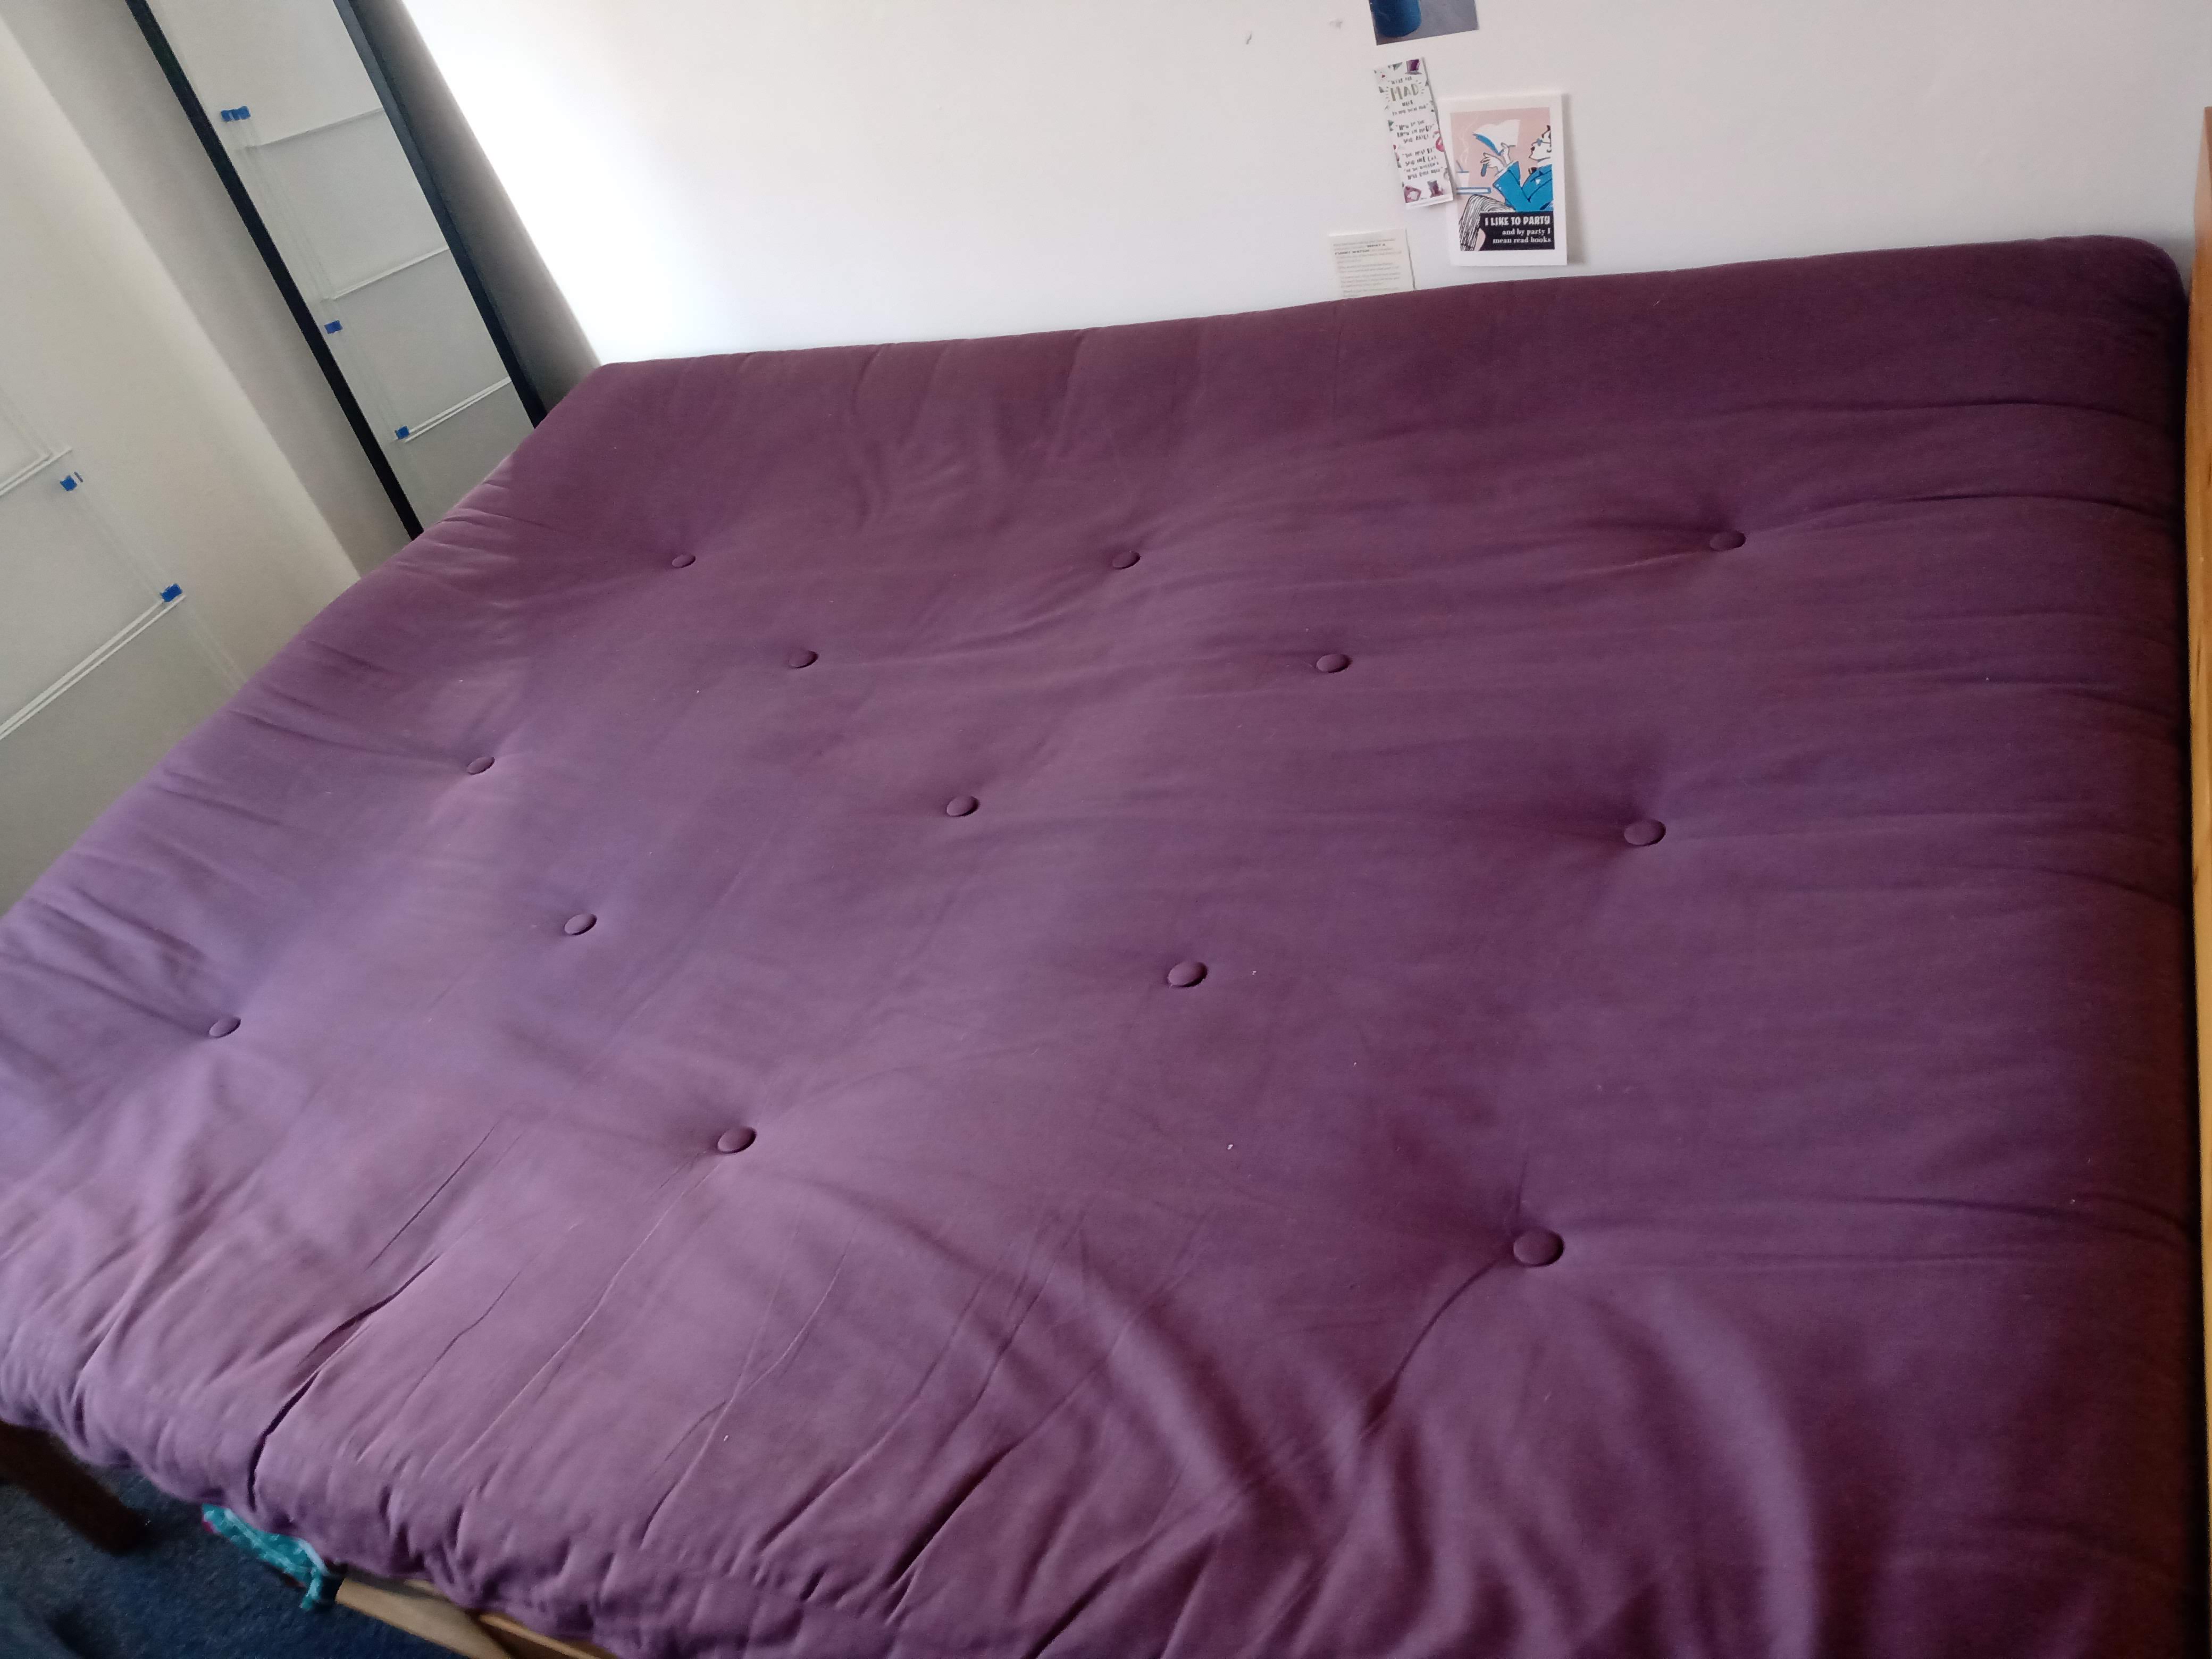 Full photo of mattress